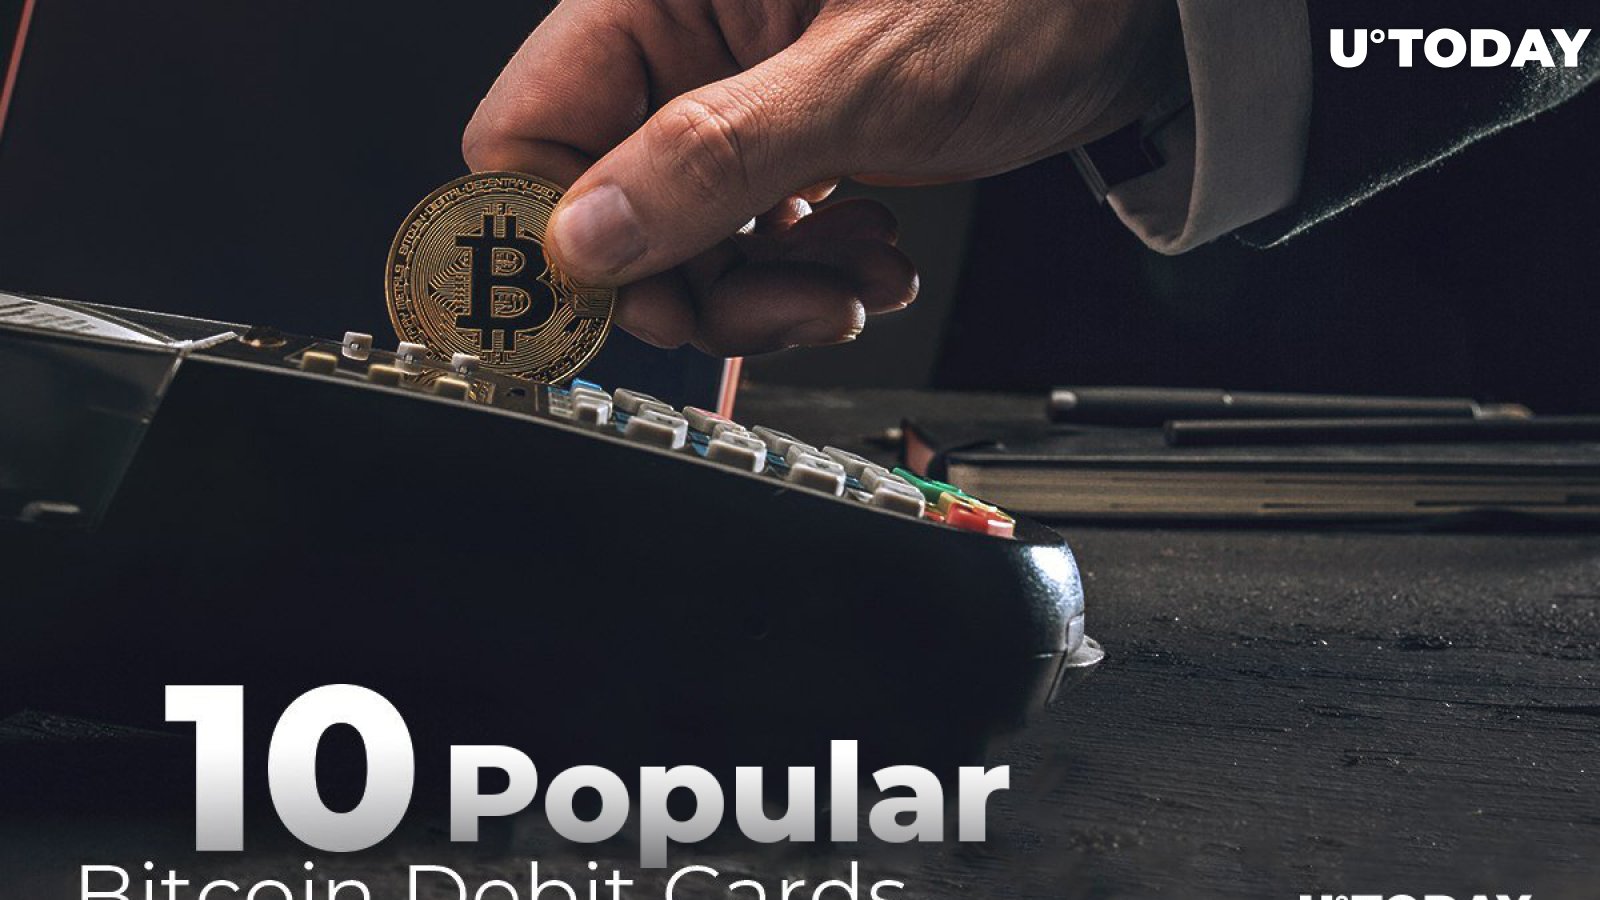 10 Popular Bitcoin Debit Cards in 2019